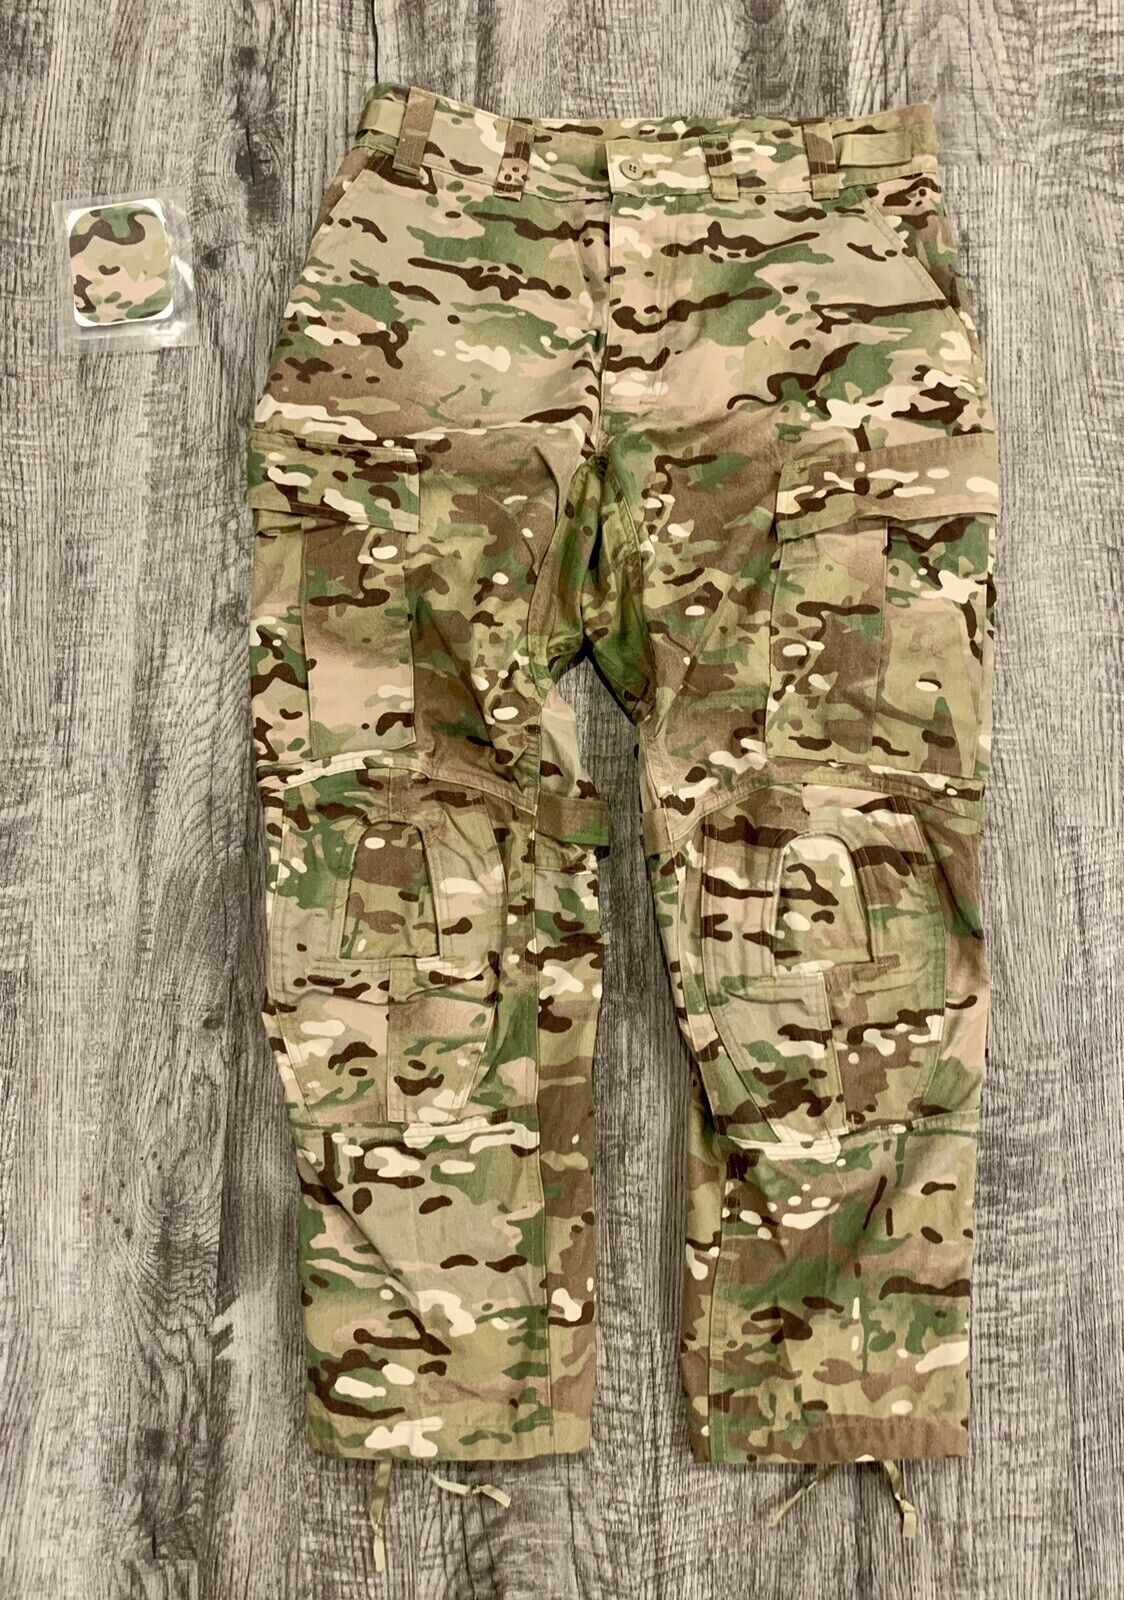 NWOT USGI Multicam Army Combat Pants FRACU with Crye Knee Pad Slots Large Short